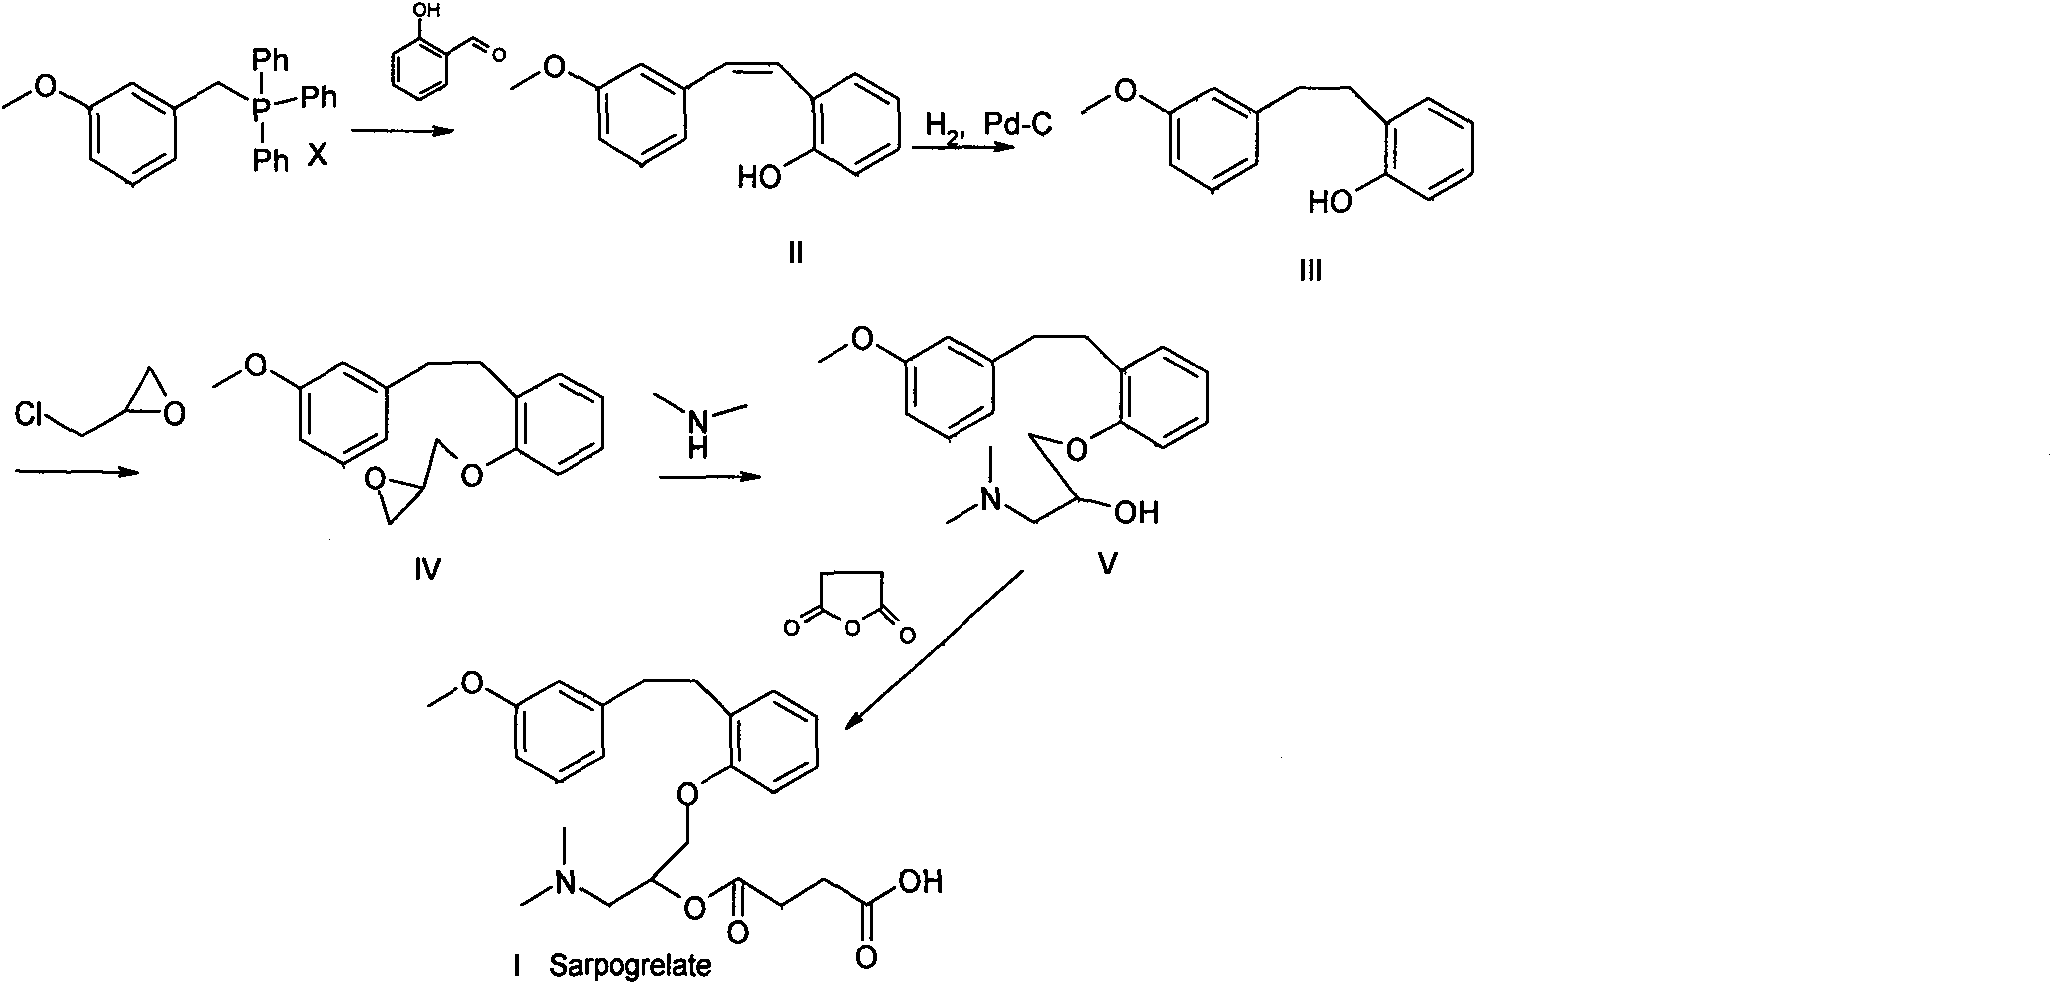 Method for preparing sarpogrelate hydrochloride